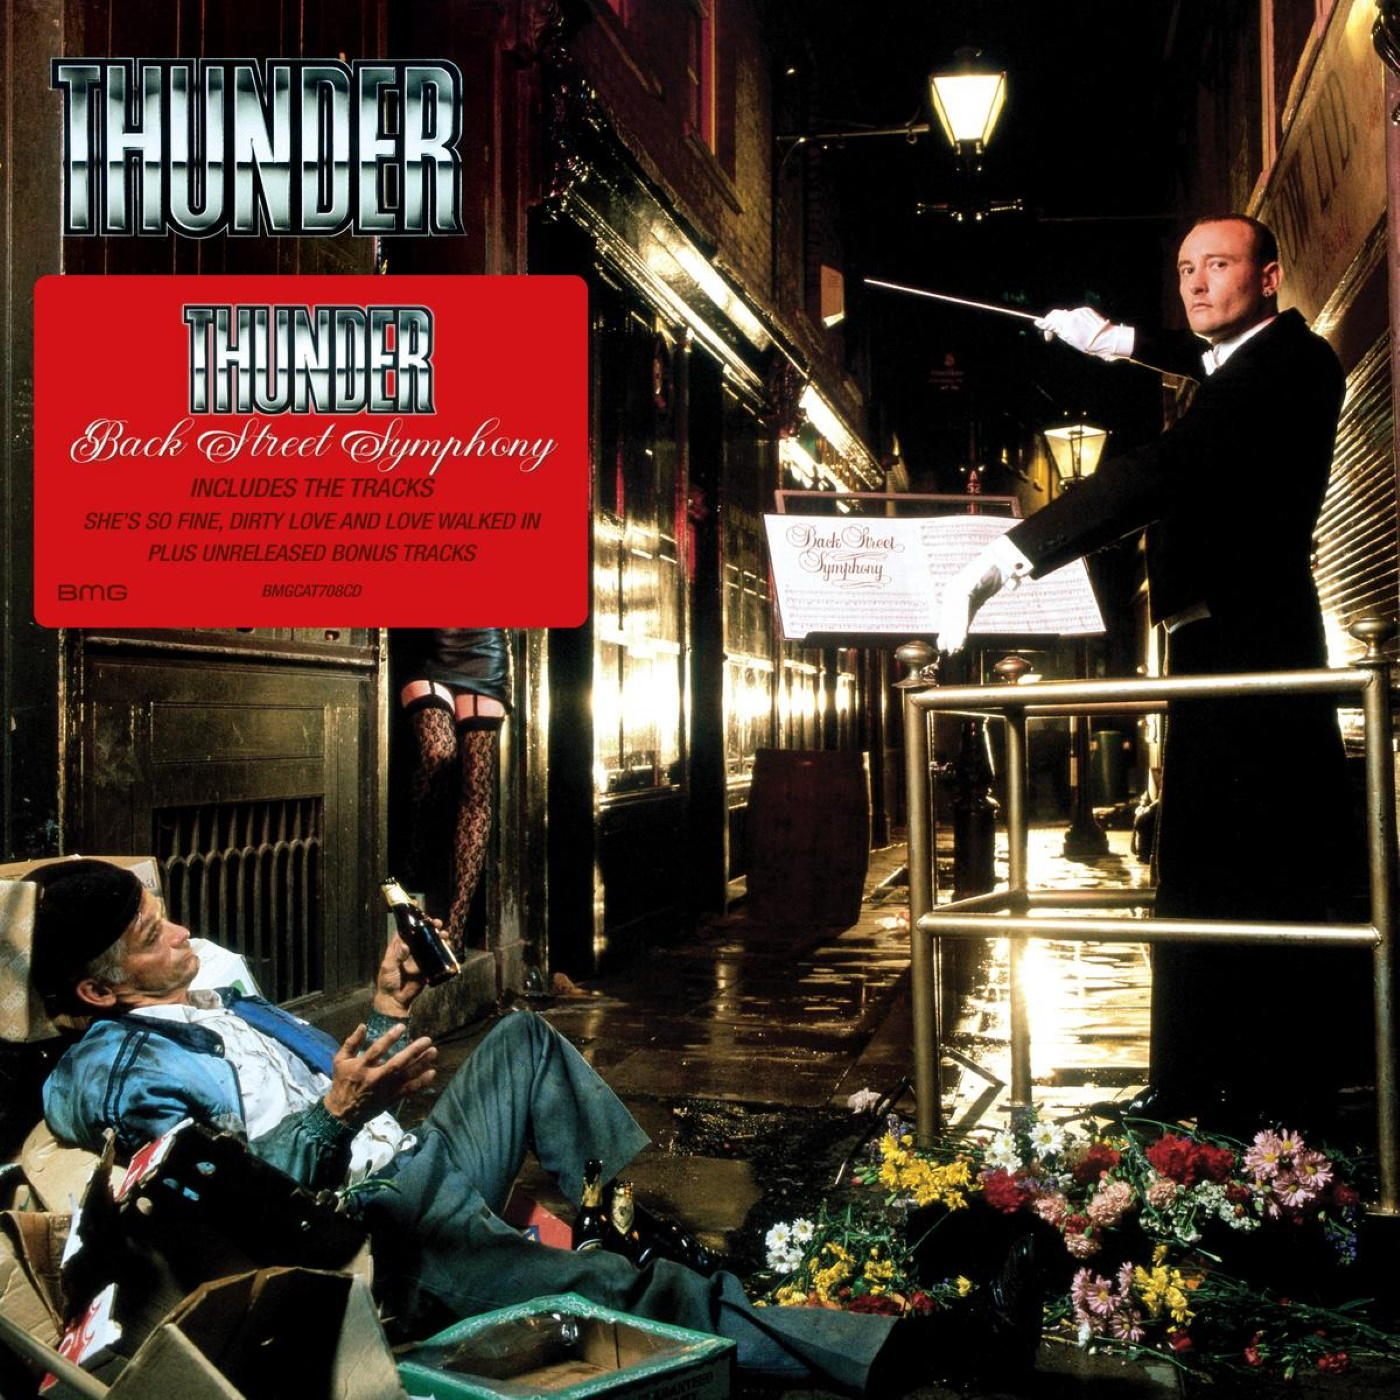 Backstreet Symphony (CD) - - Thunder